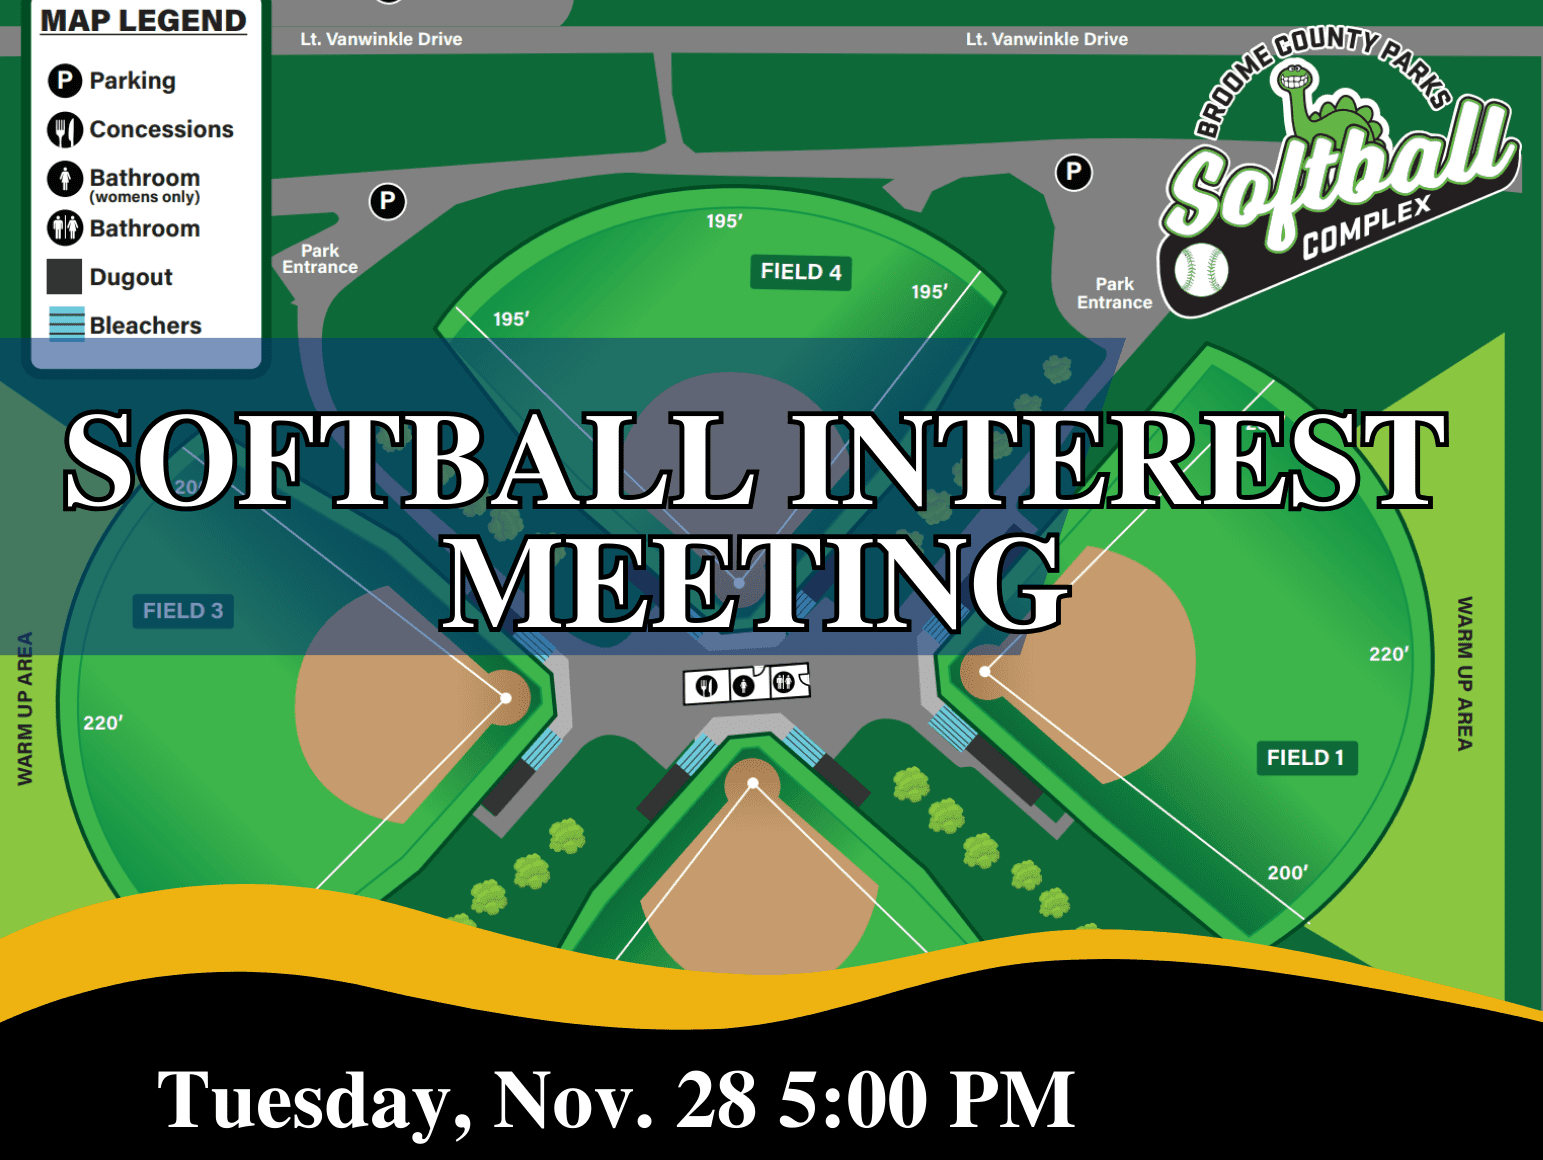 Softball Interest Meeting Flyer Tuesday Nov. 28 at 8 pm